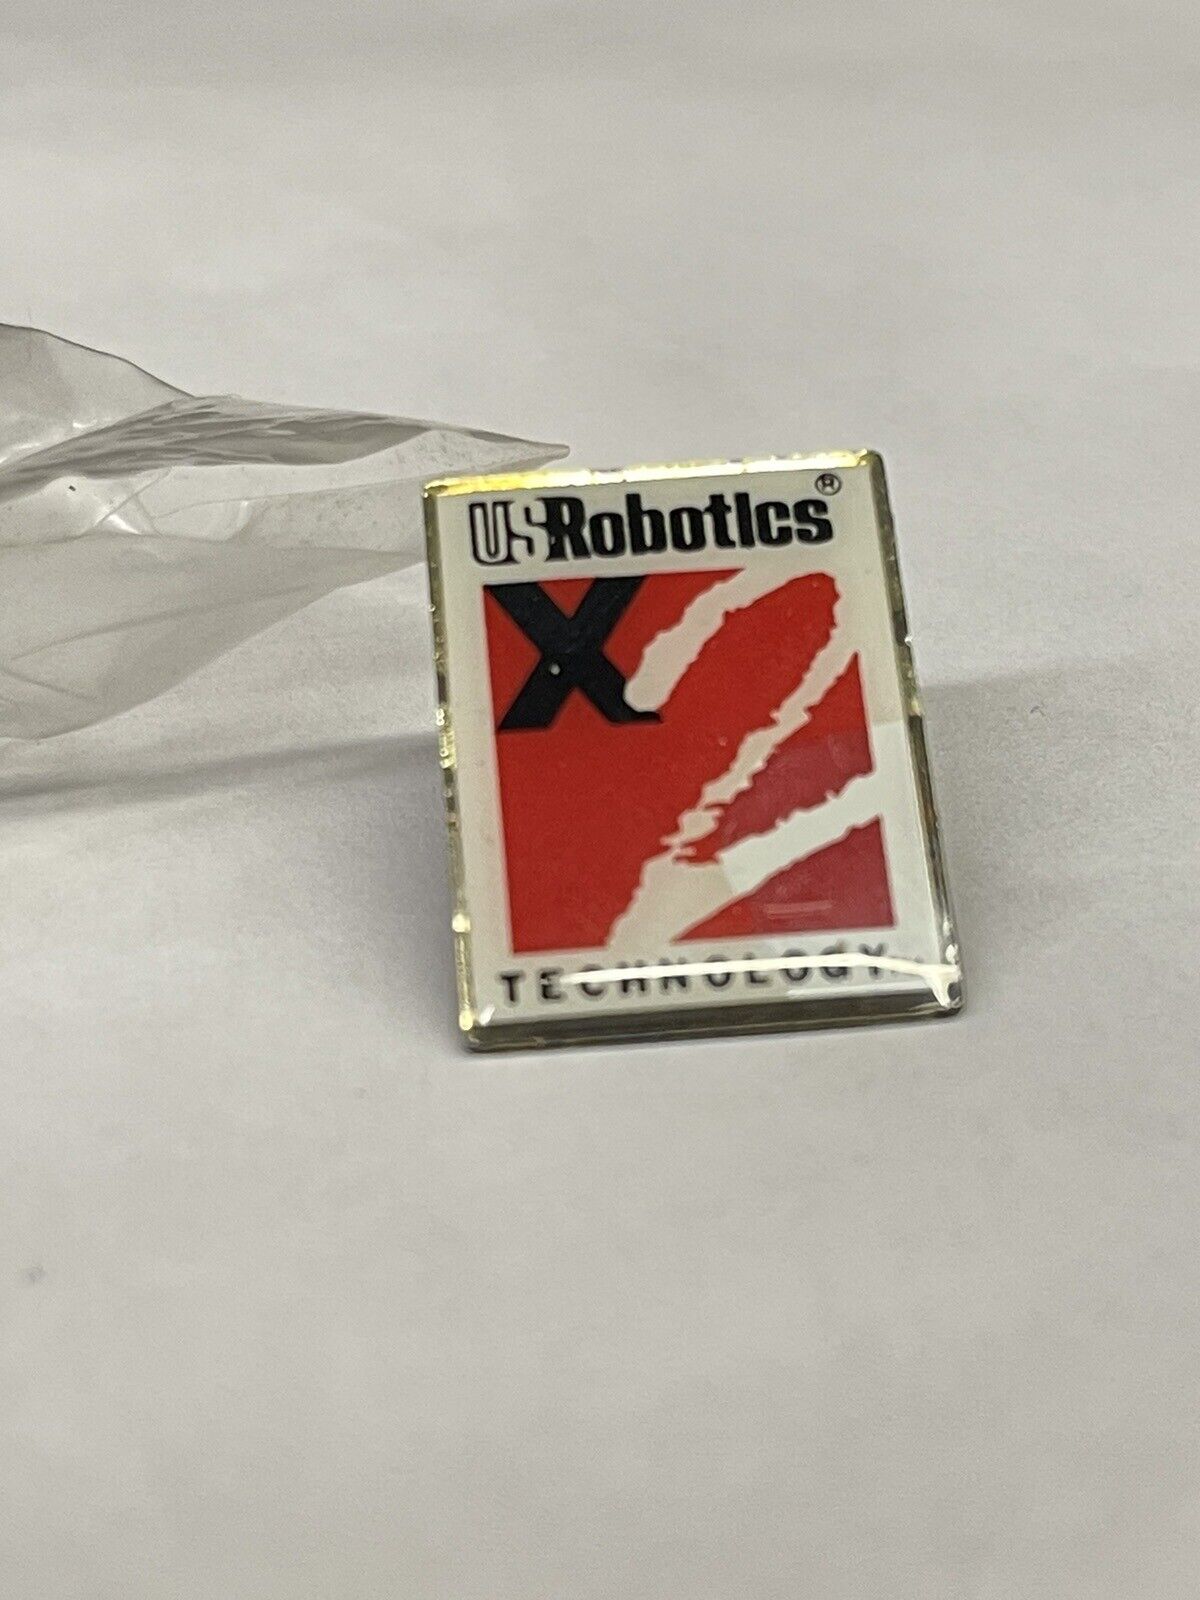 1990s US ROBOTICS X2 Technology Pinback Button Pin Badge vintage computers modem